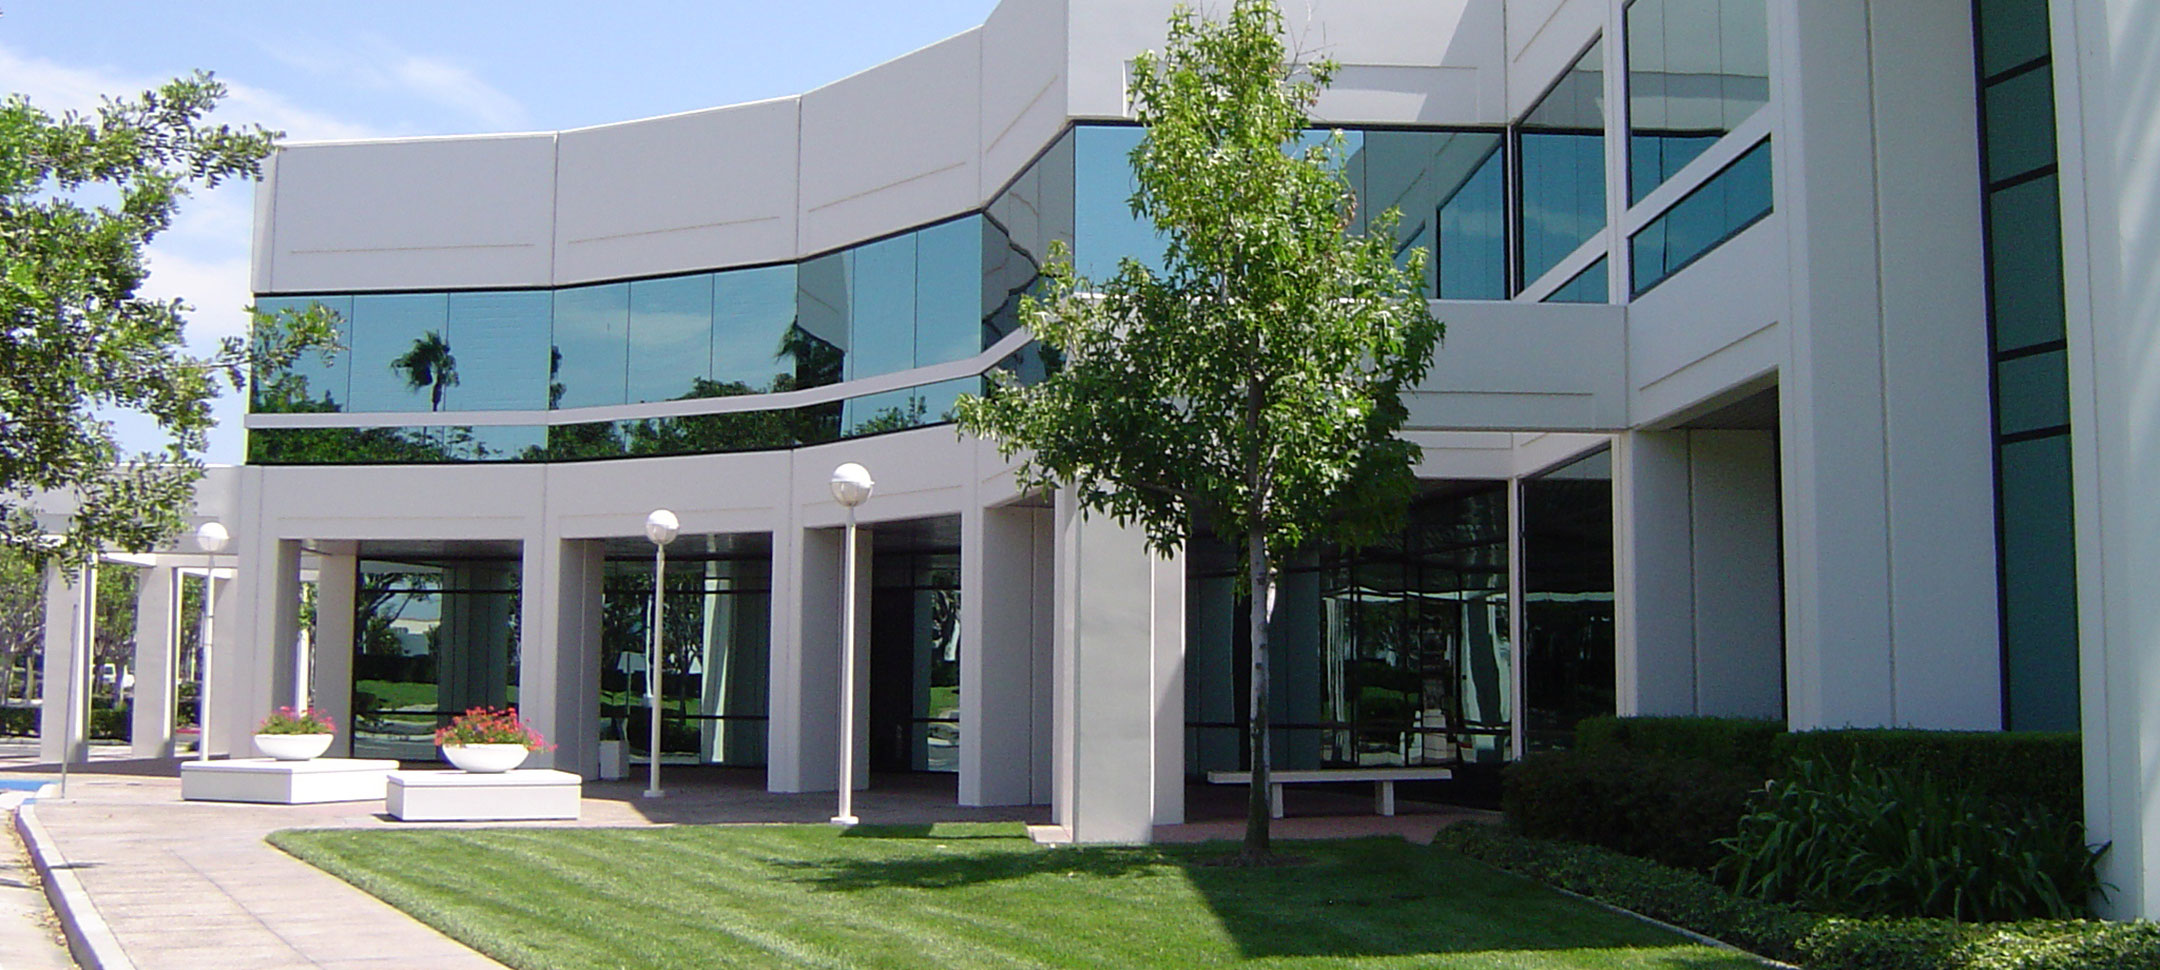 Panorama Property Management Denver, Co | Commercial Property Management Denver, CO | Commercial Janitorial Service